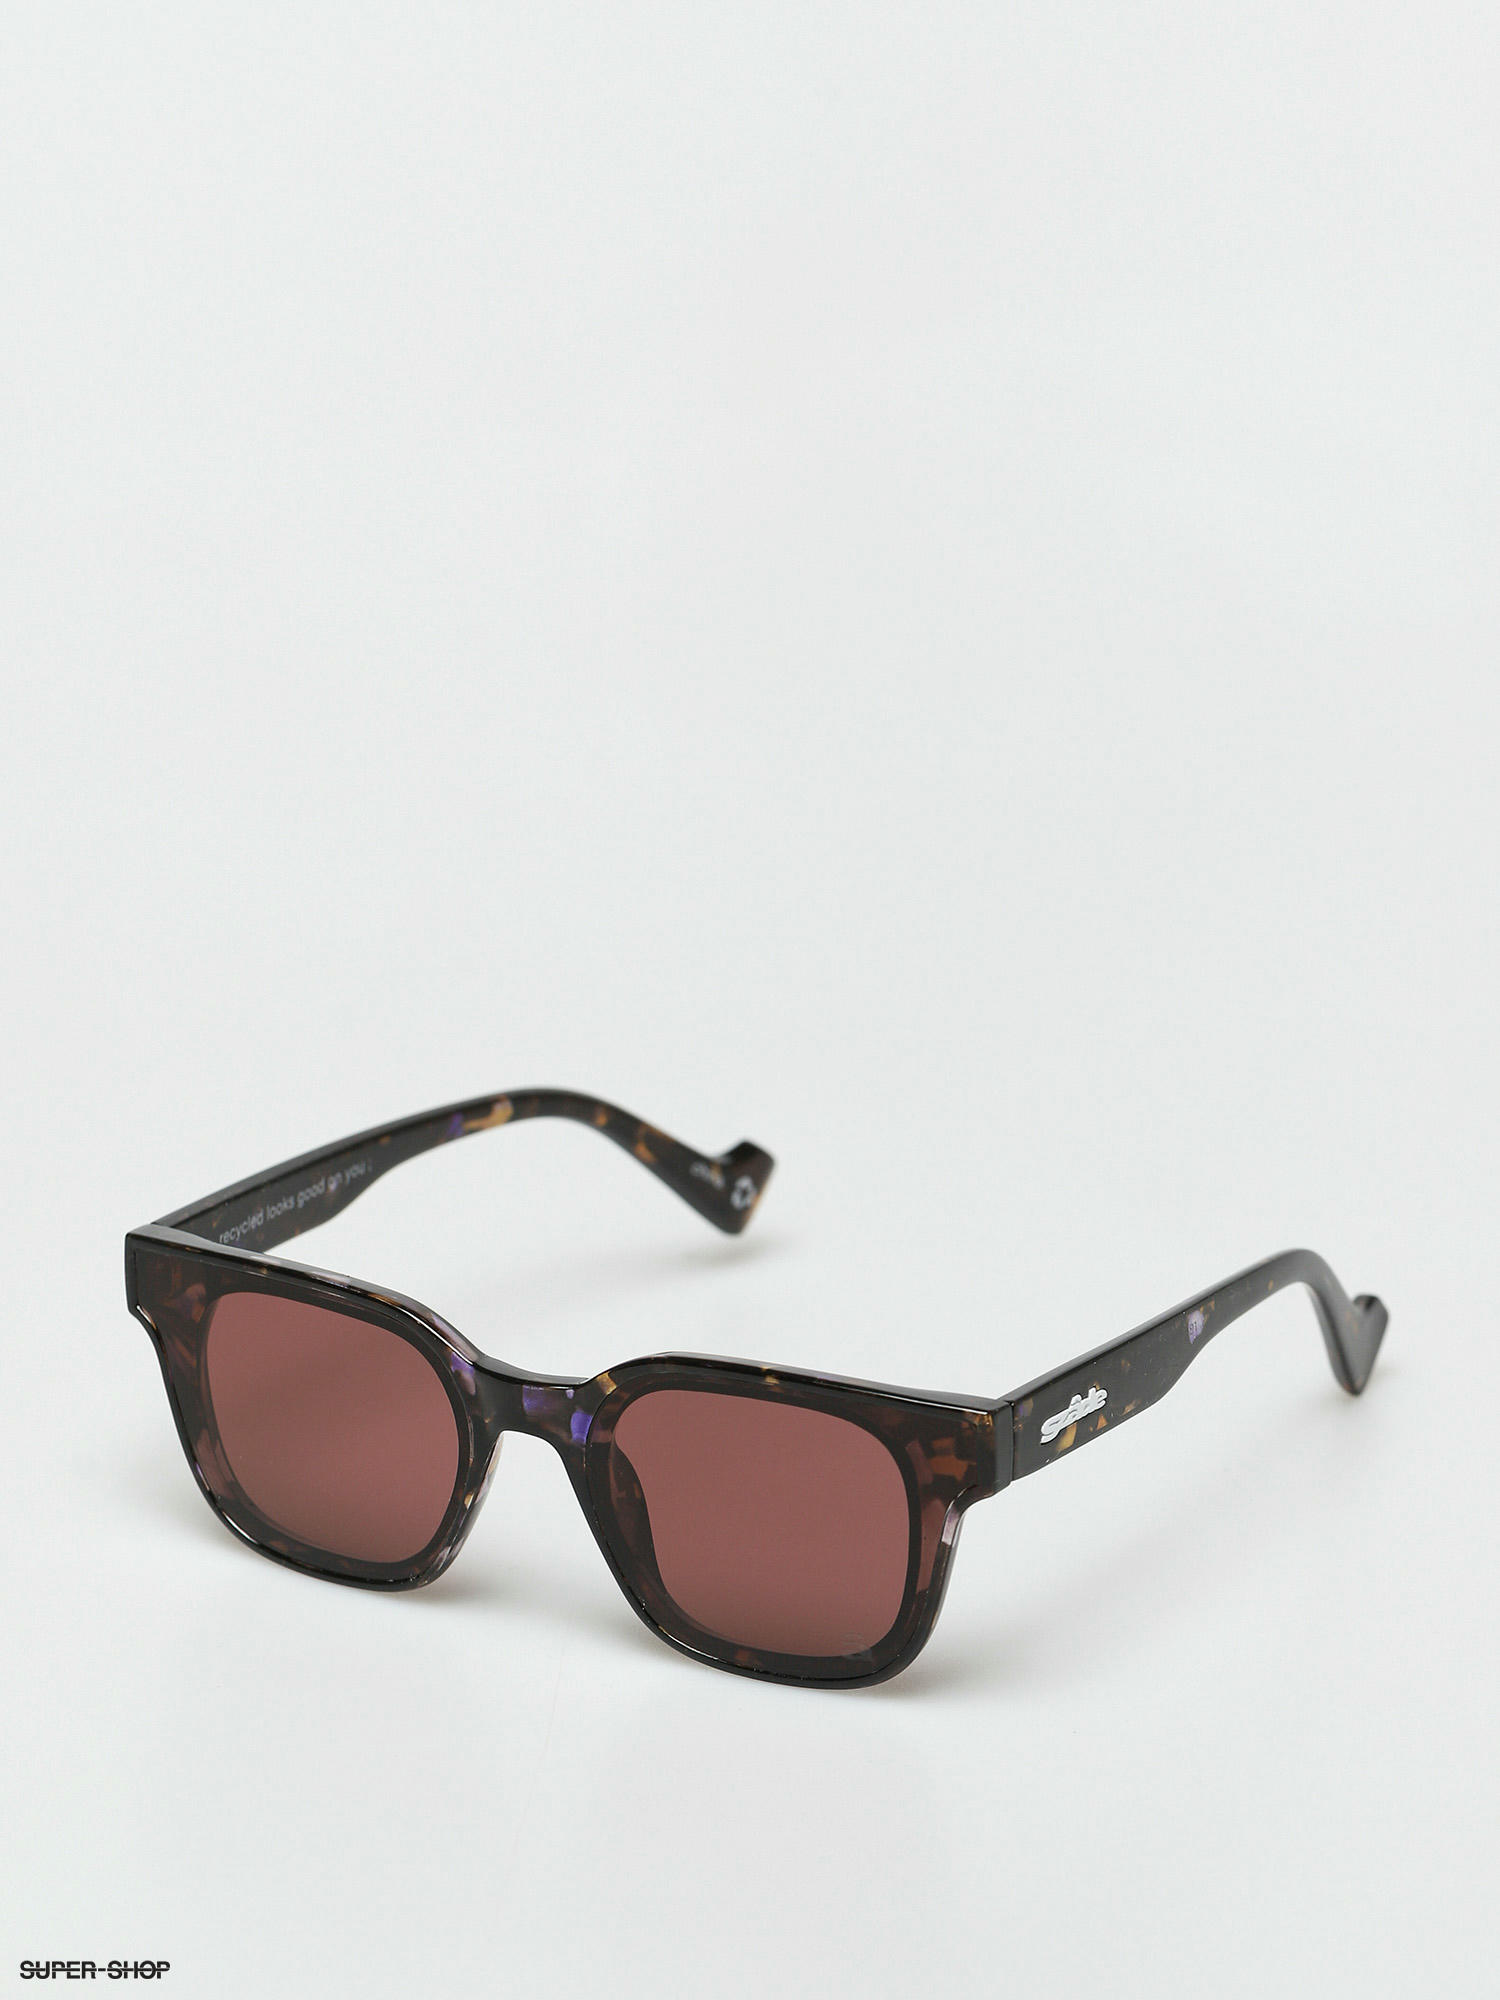 Hypeclinic BlackBerry Sunglasses